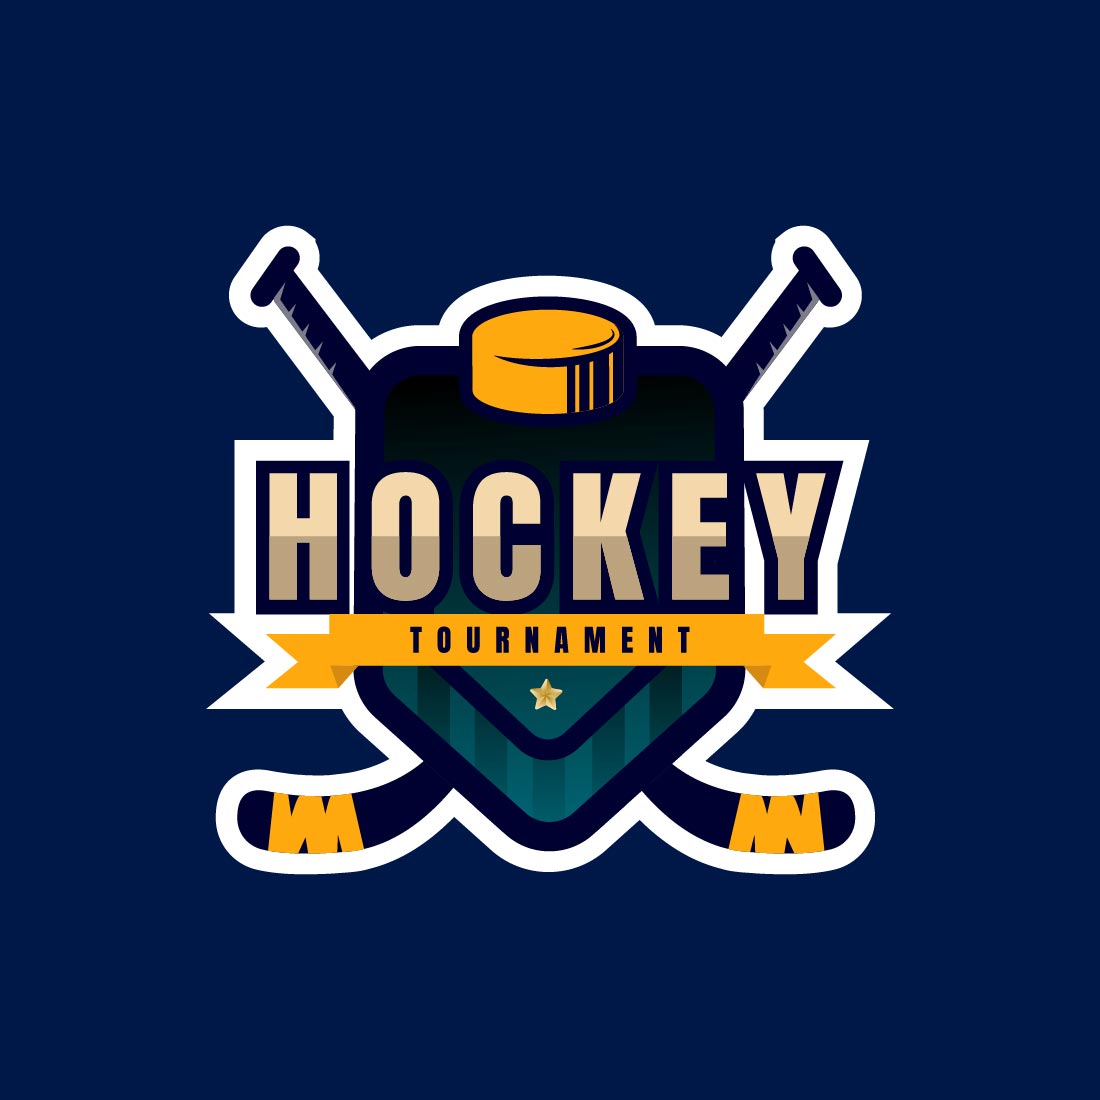 Ice Hockey Club Logo, Badge Design cover image.